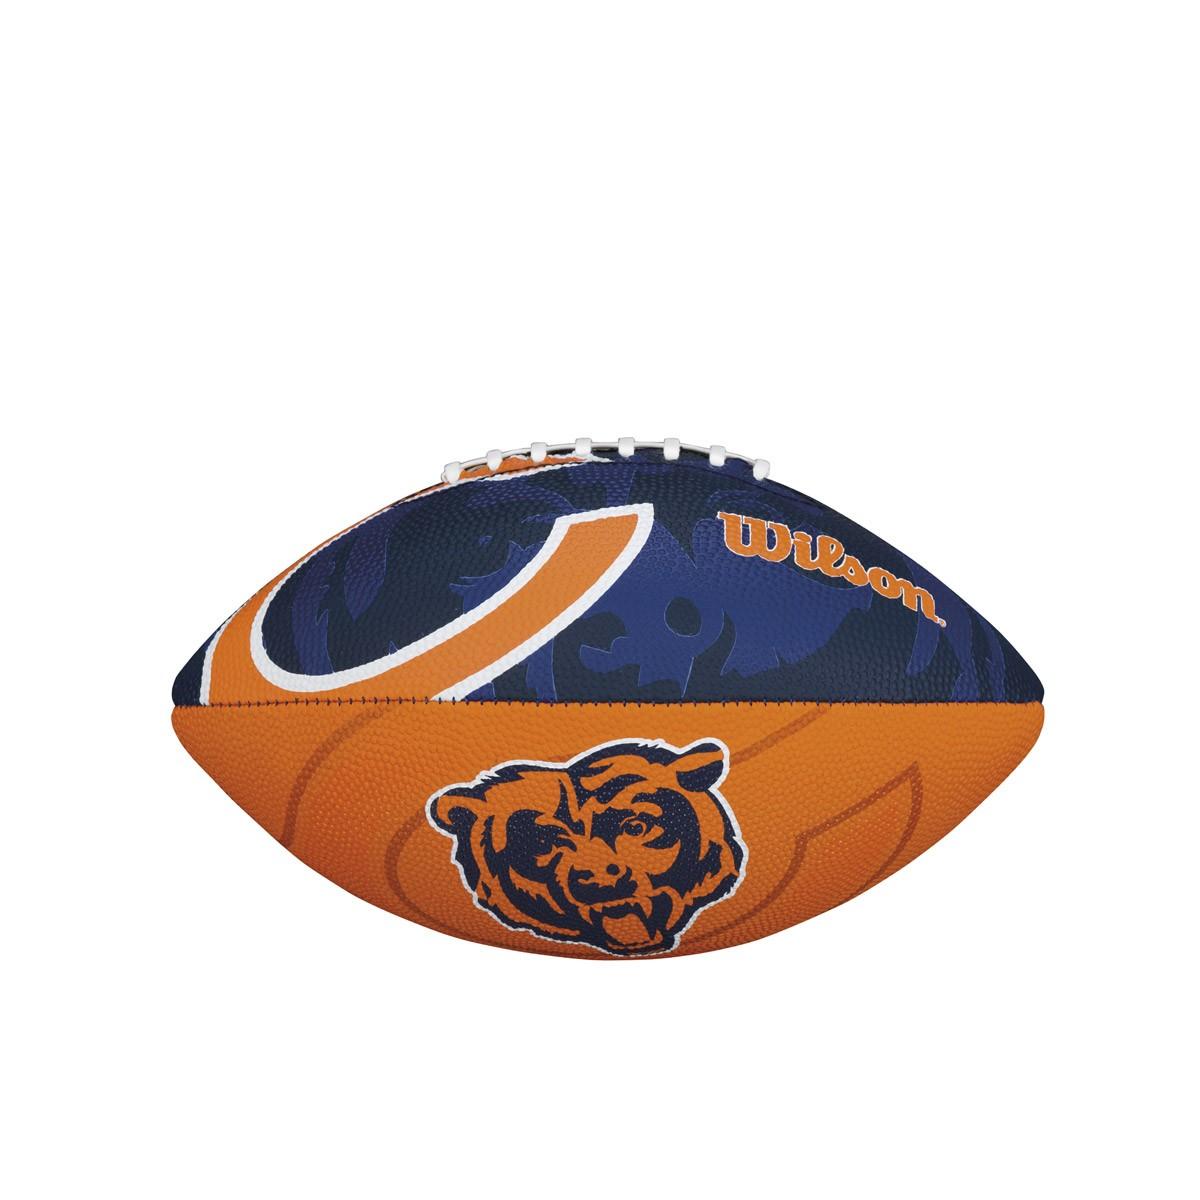 NFL Team Logo Junior Size American Football - Chicago Bears